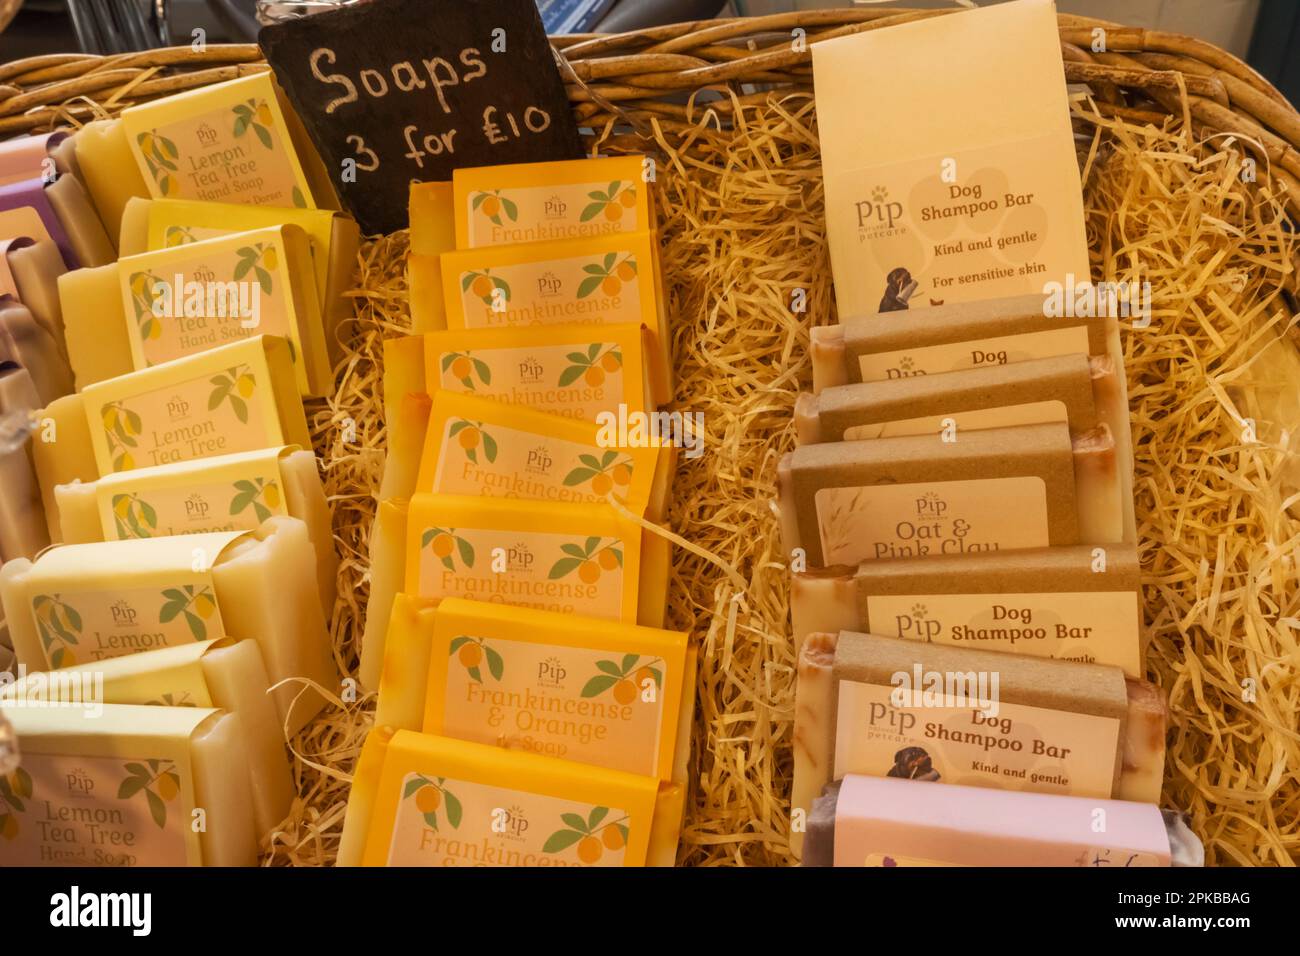 England, Dorset, Shaftesbury, Shaftesbury Town Hall, The Weekly Country Market, Display of Handmade Soaps and Dog Shampoo Stock Photo